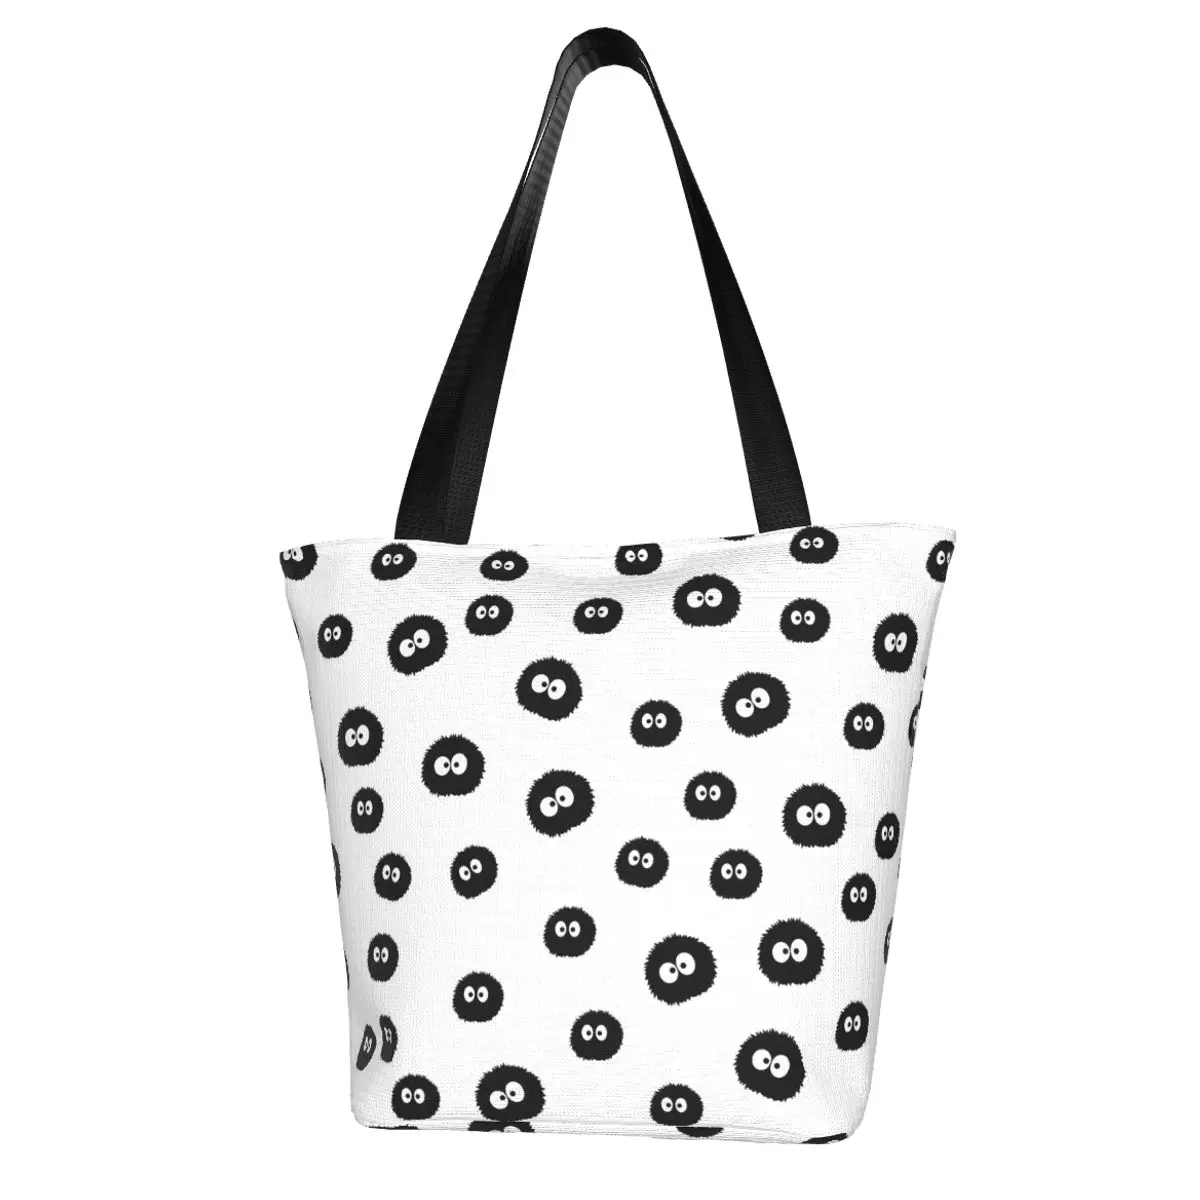 Totoro - Soot Sprites Pattern Shopping Bag Aesthetic Cloth Outdoor Handbag Female Fashion Bags